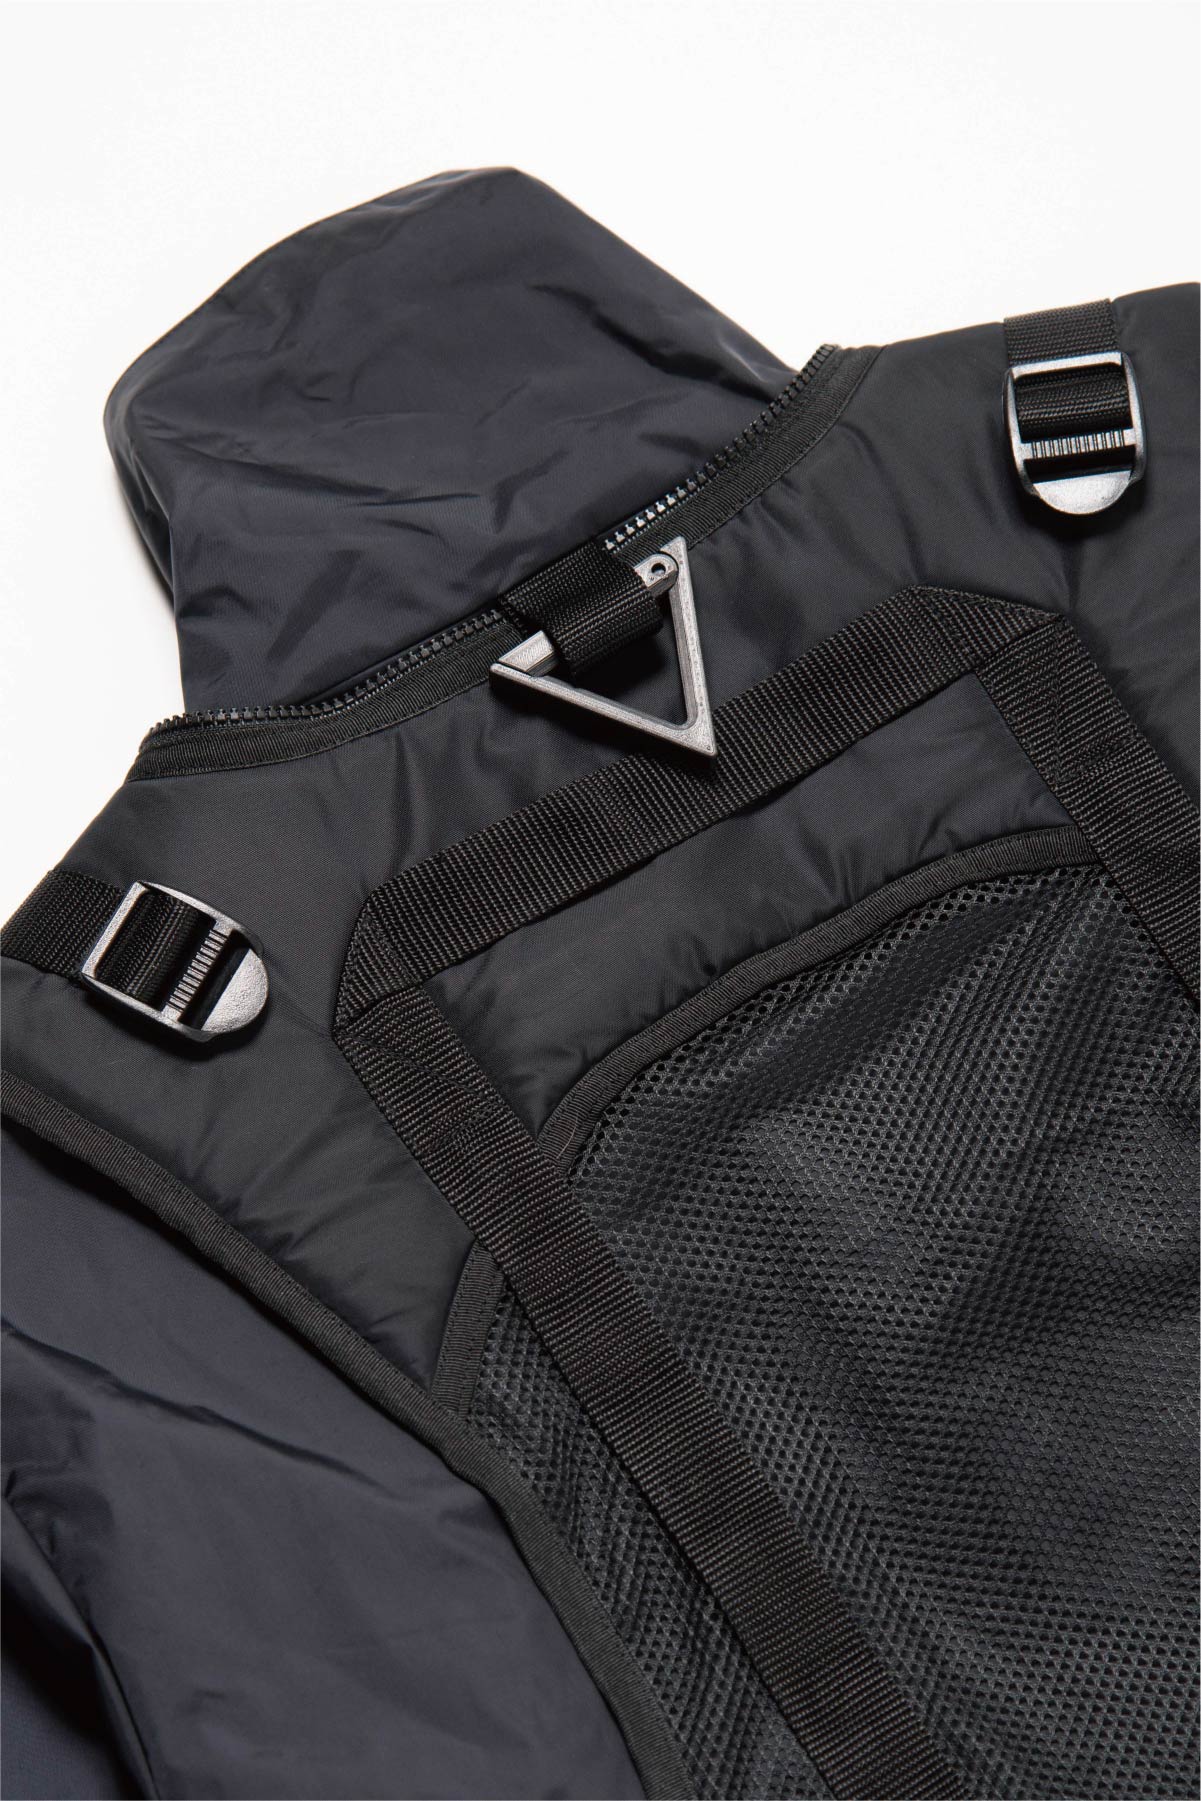 Shell jacket + Harness vest Set